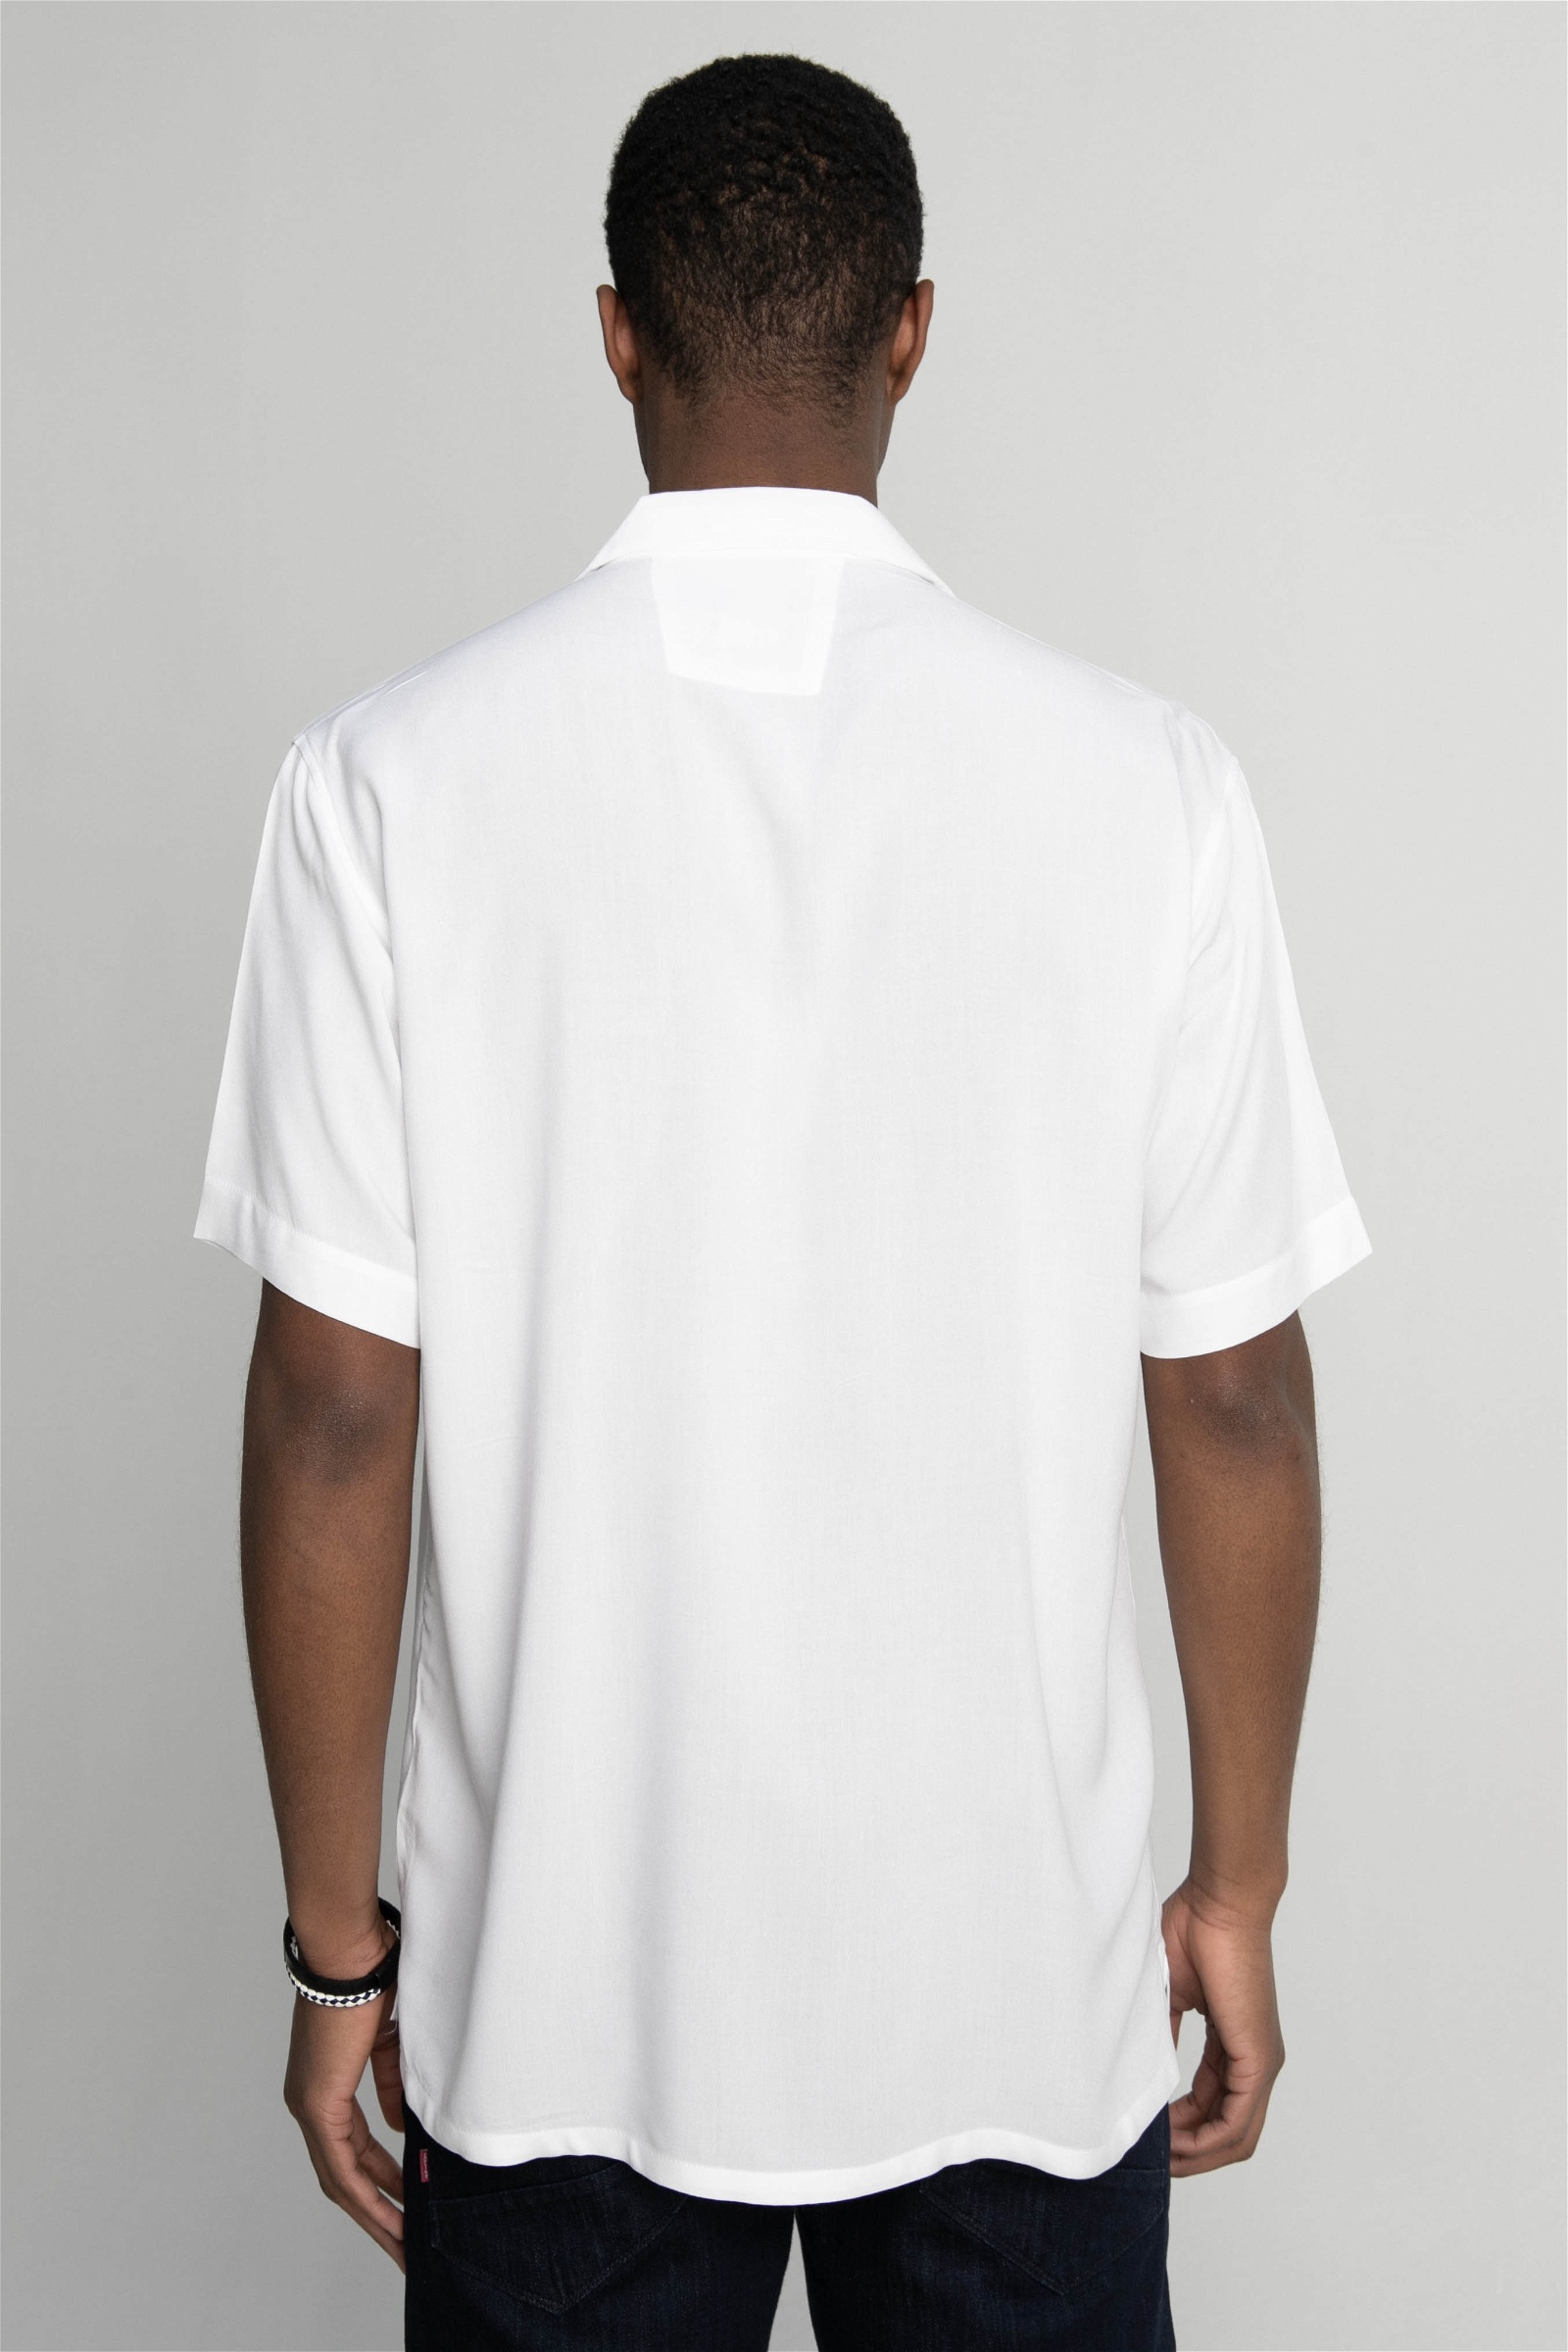 Plain White Shirt